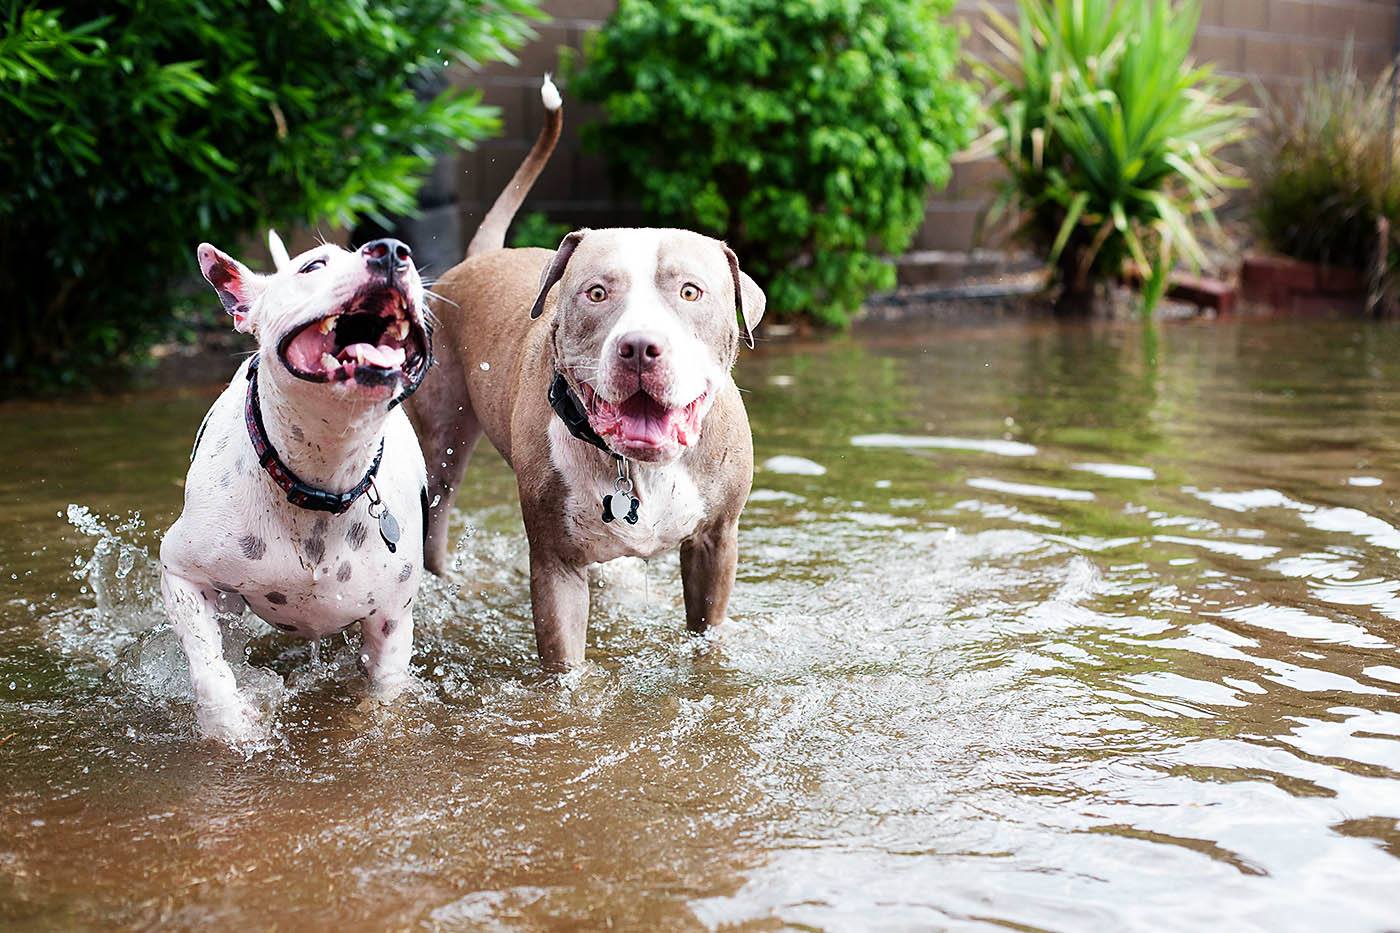 Dogs running through water from Allison Waken